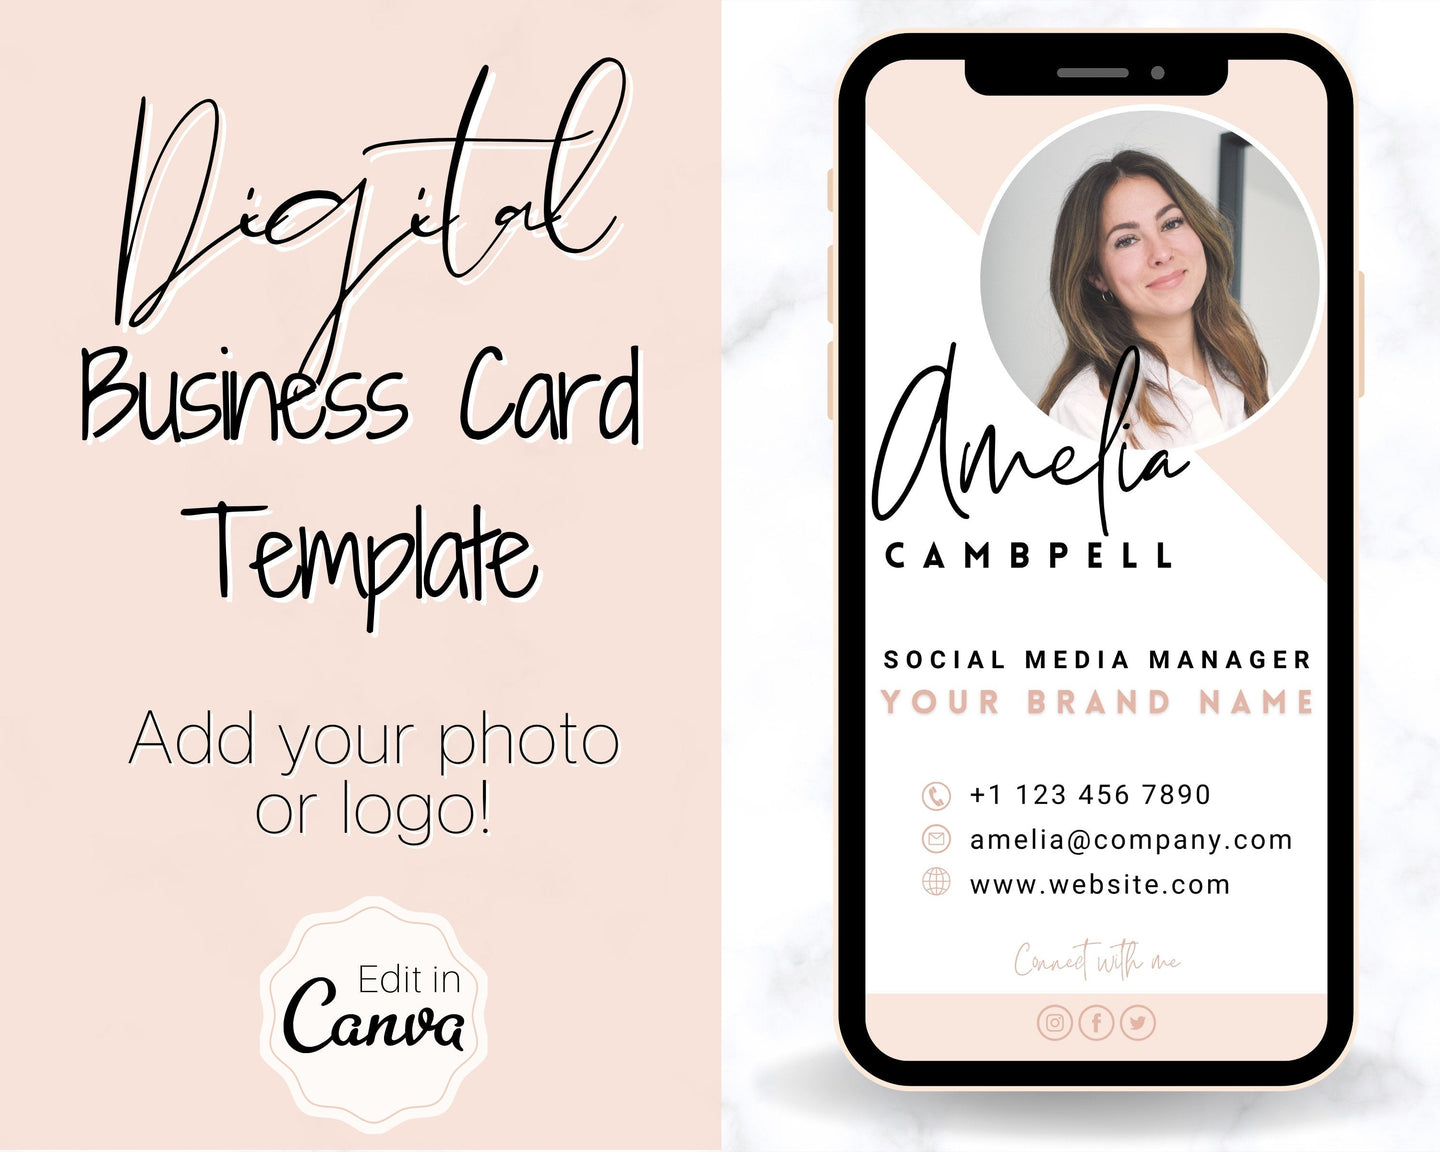 Digital Business Card Template. DIY add logo & photo! Editable Canva Design. Modern, Realtor Marketing, Real Estate, Realty Professional | Pink Style 5